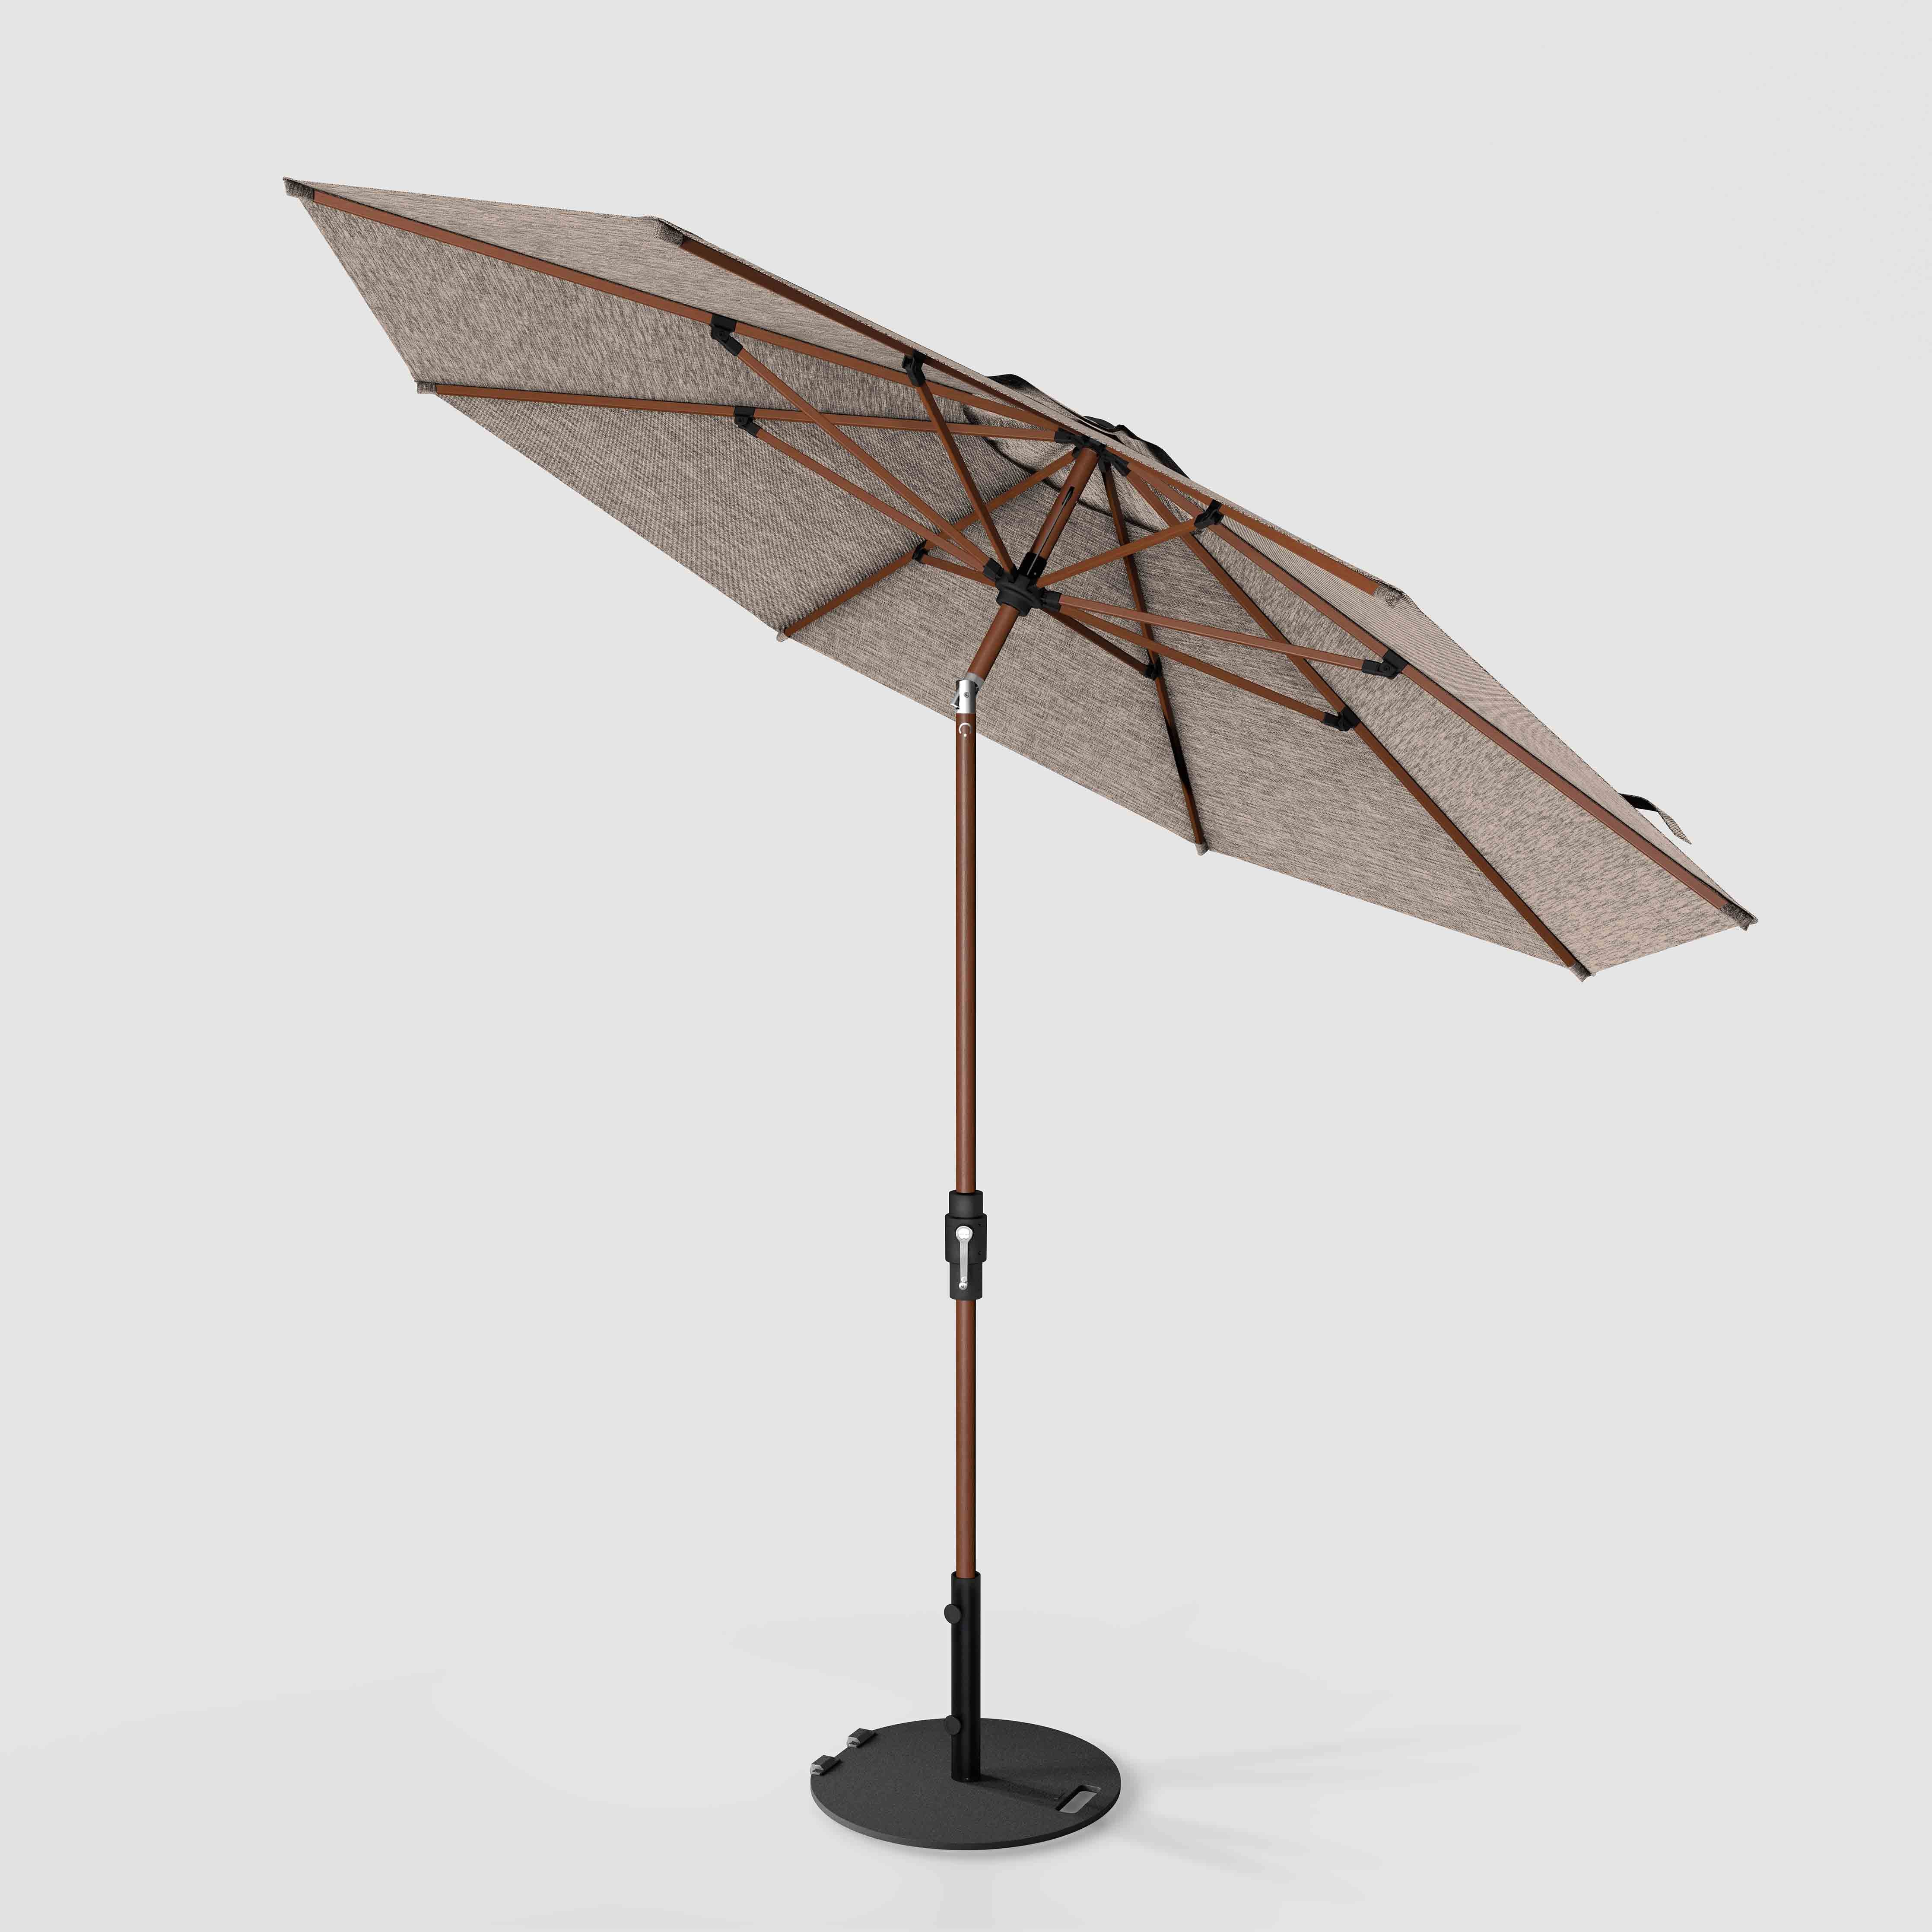 The Wooden 2™ - Sunbrella Cast Shale